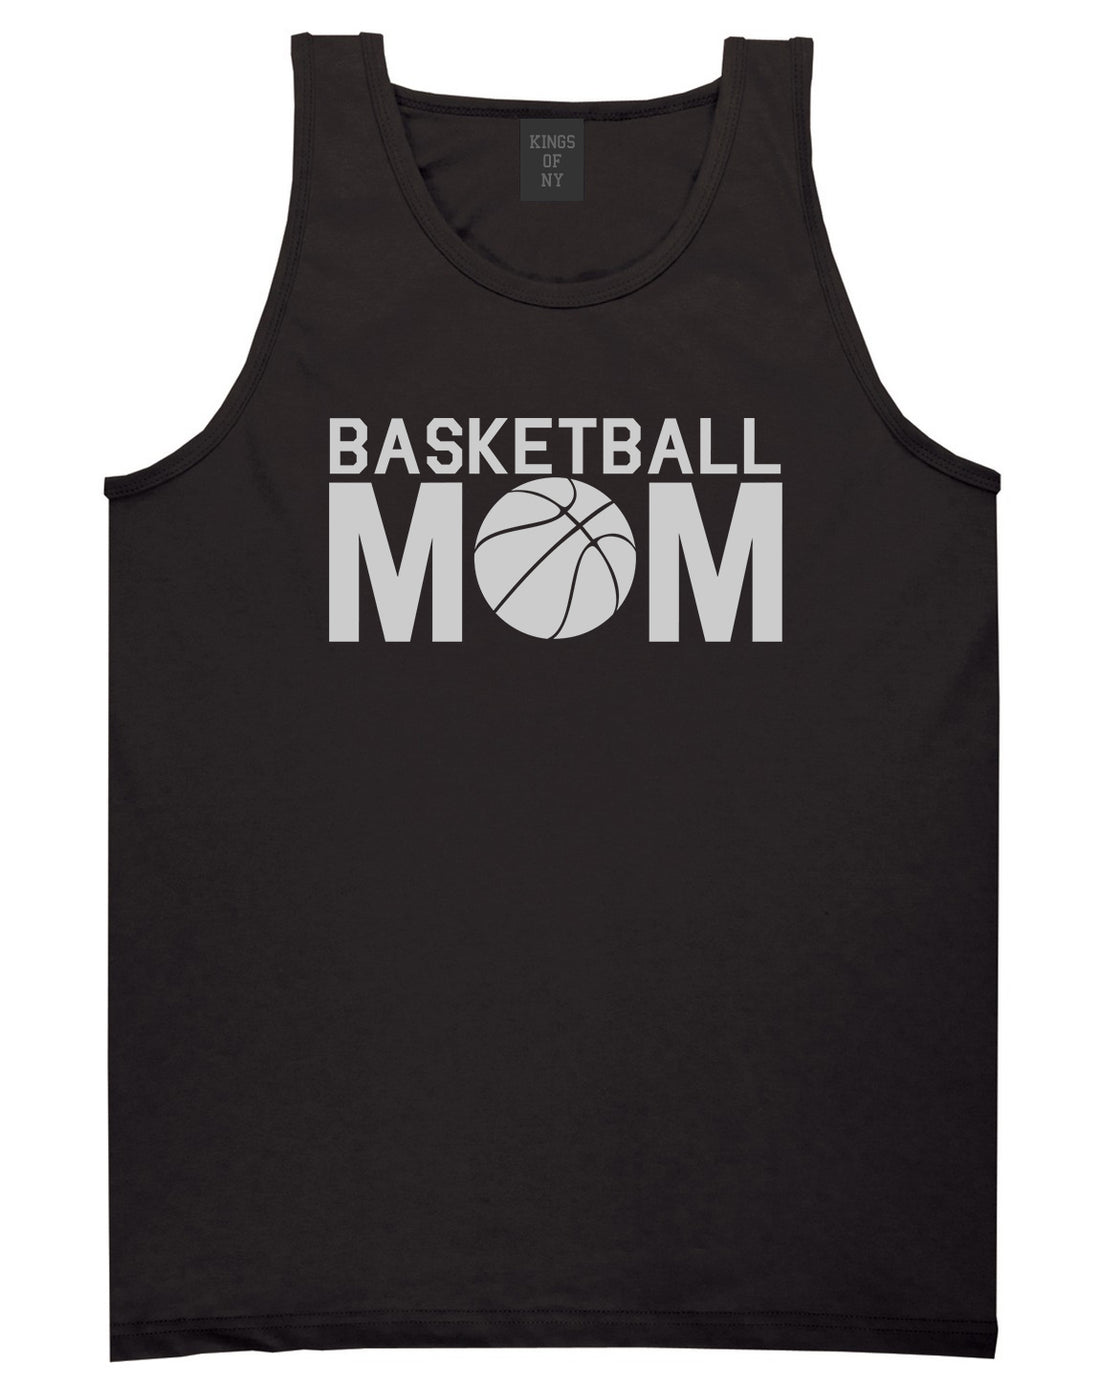 Basketball Mom Black Tank Top Shirt by Kings Of NY